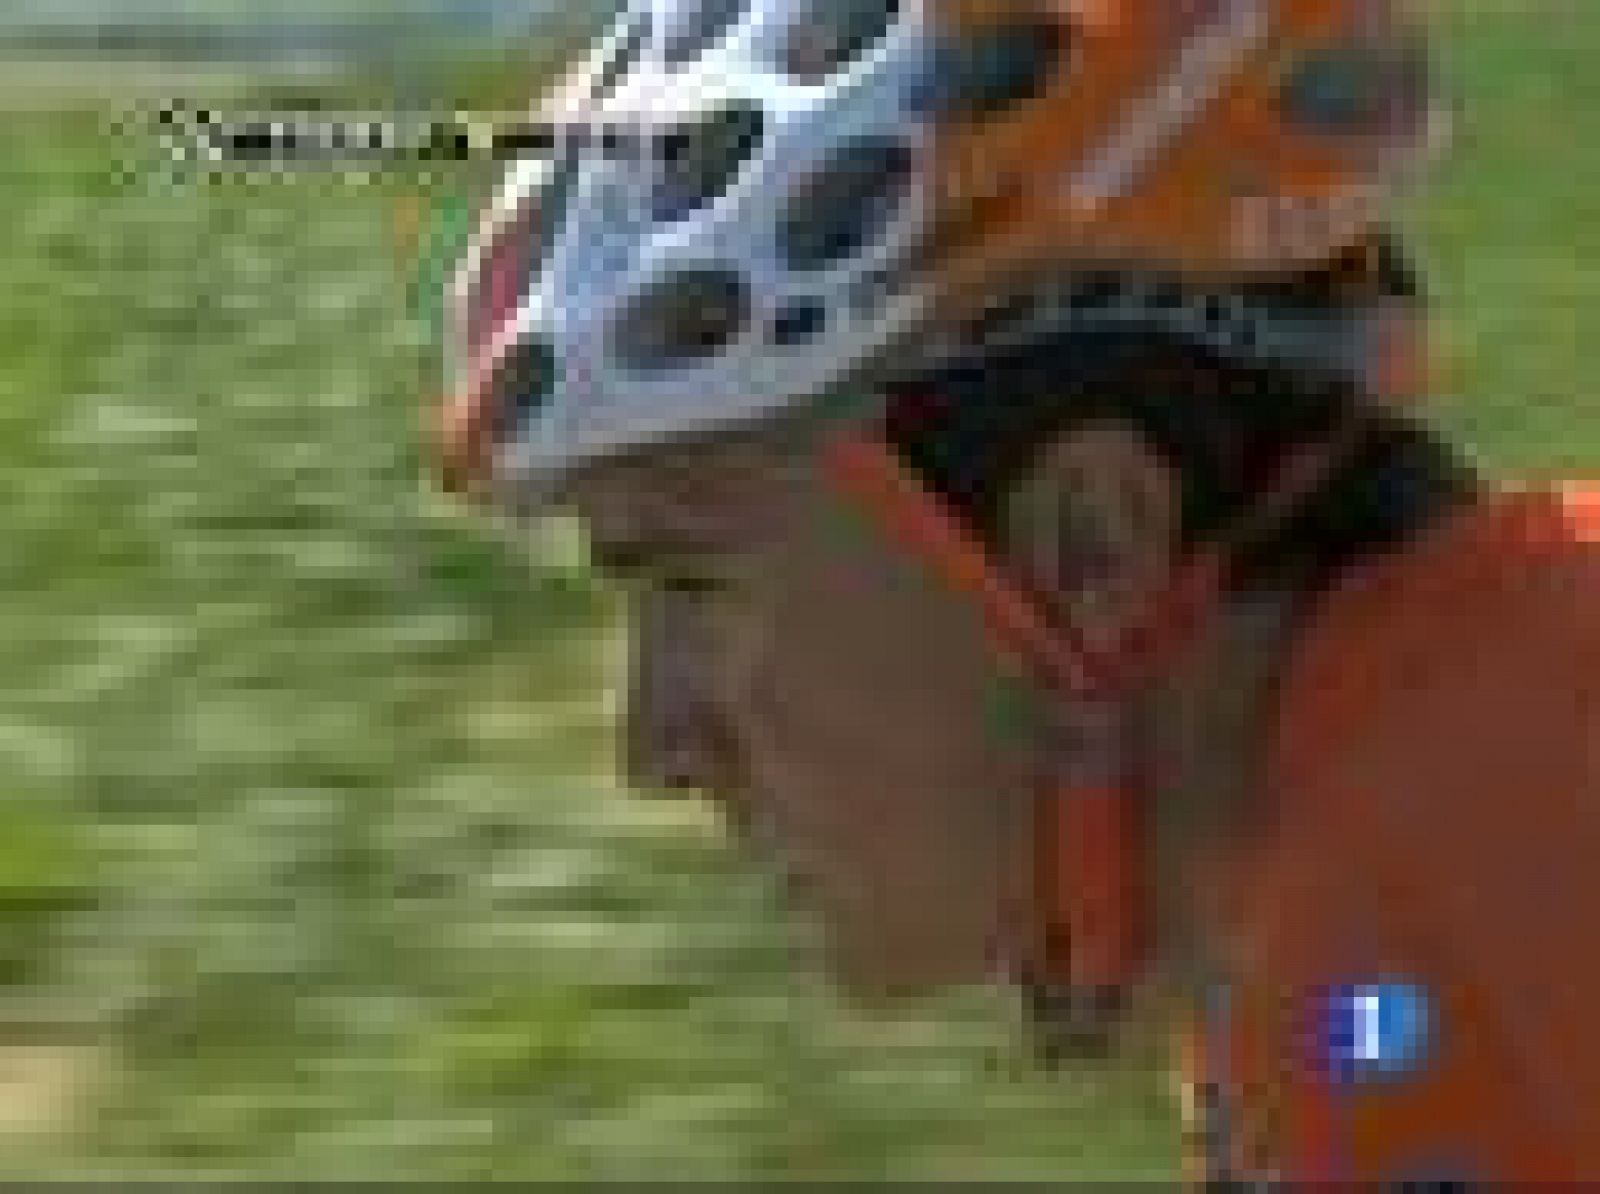  Petacchi gana la etapa del Tour